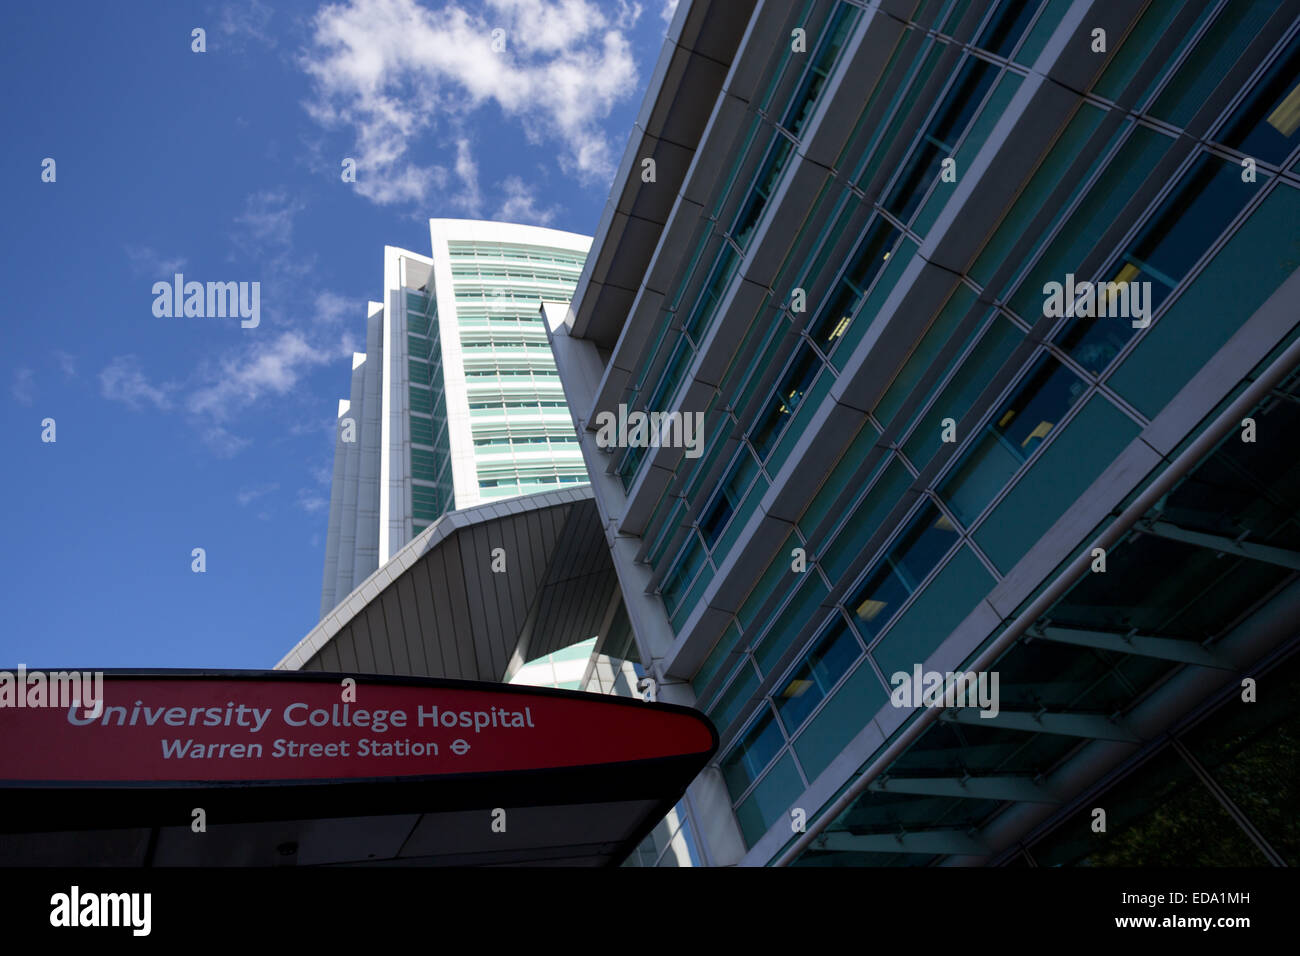 UCH University College Hospital, Londres, Royaume-Uni Banque D'Images